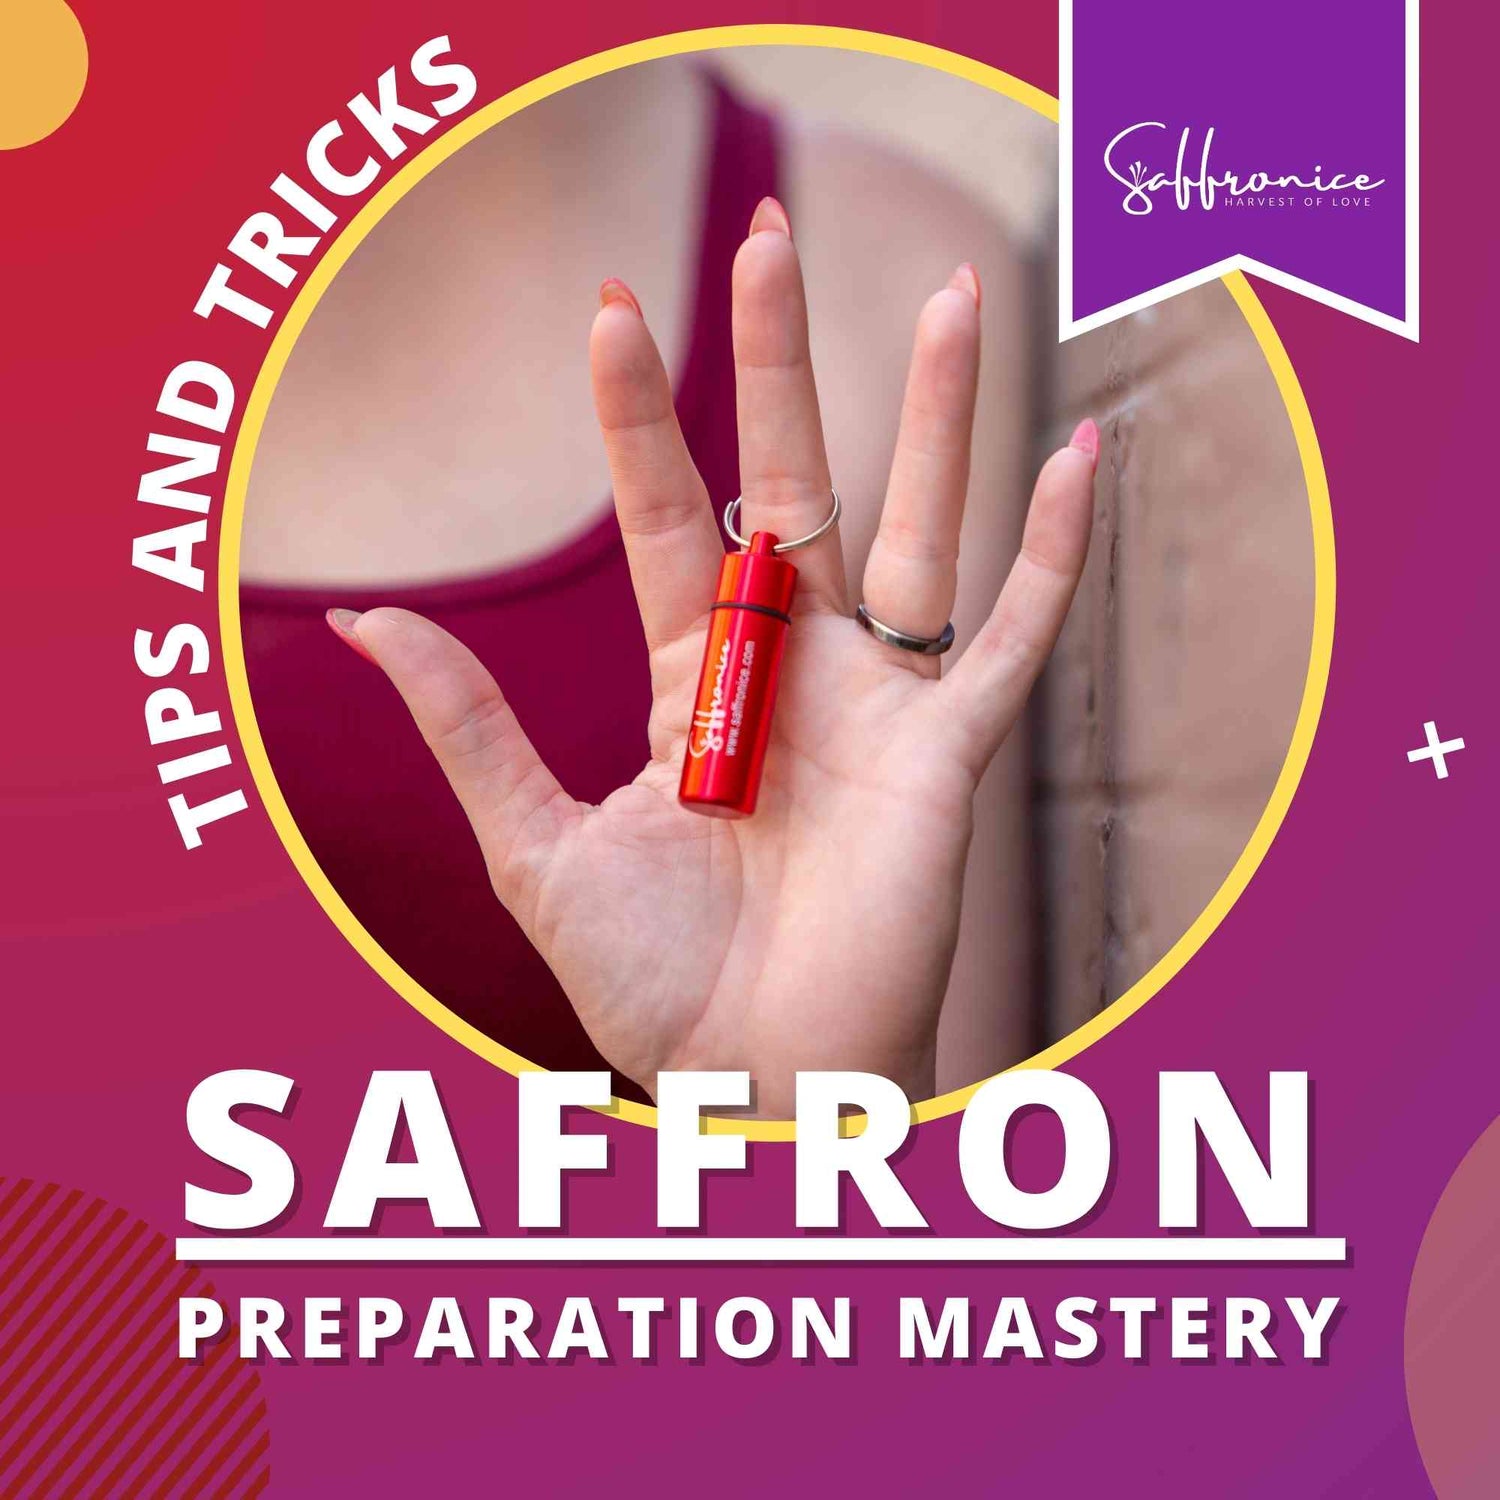 Saffron Perpetration Mastery